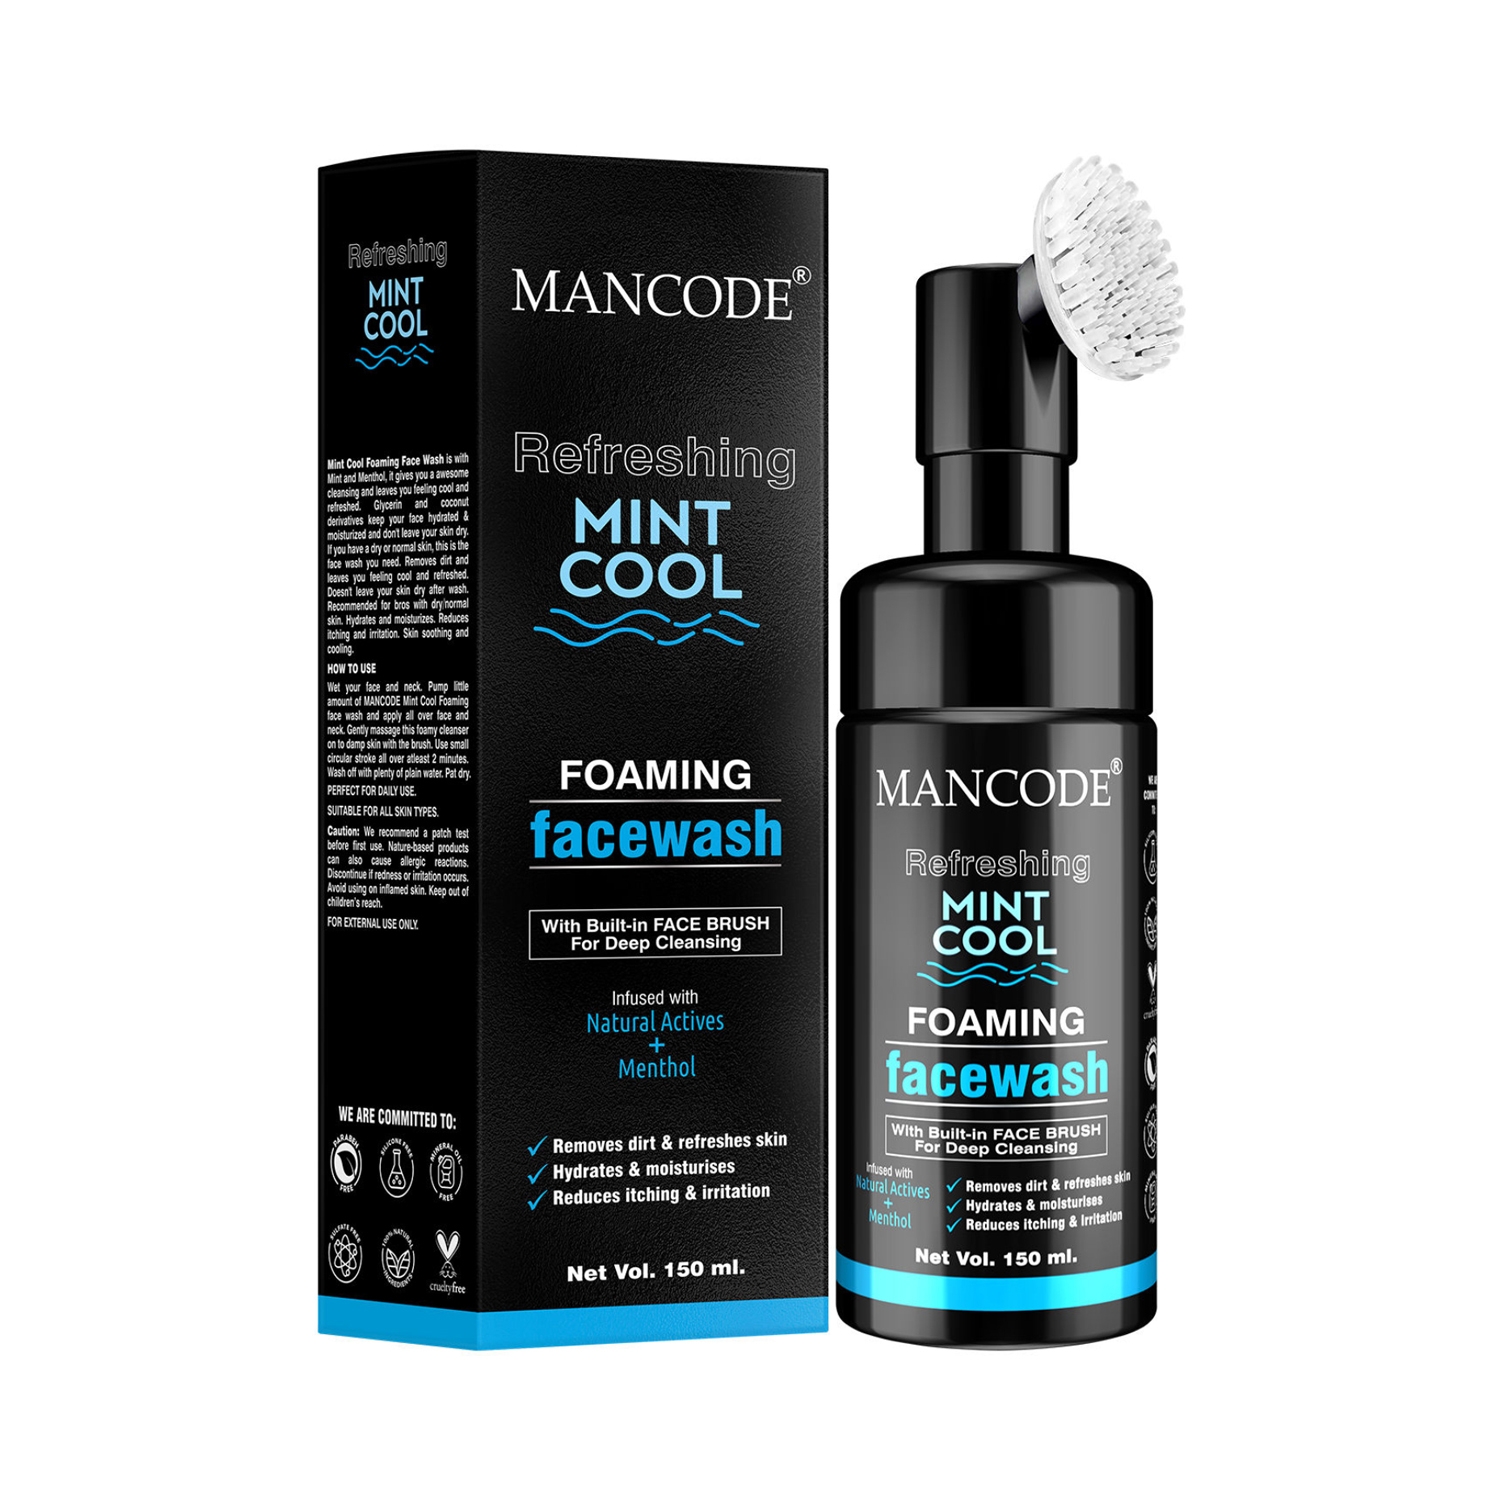 Mancode Refreshing Mint Cool Foaming Face Wash (150ml)